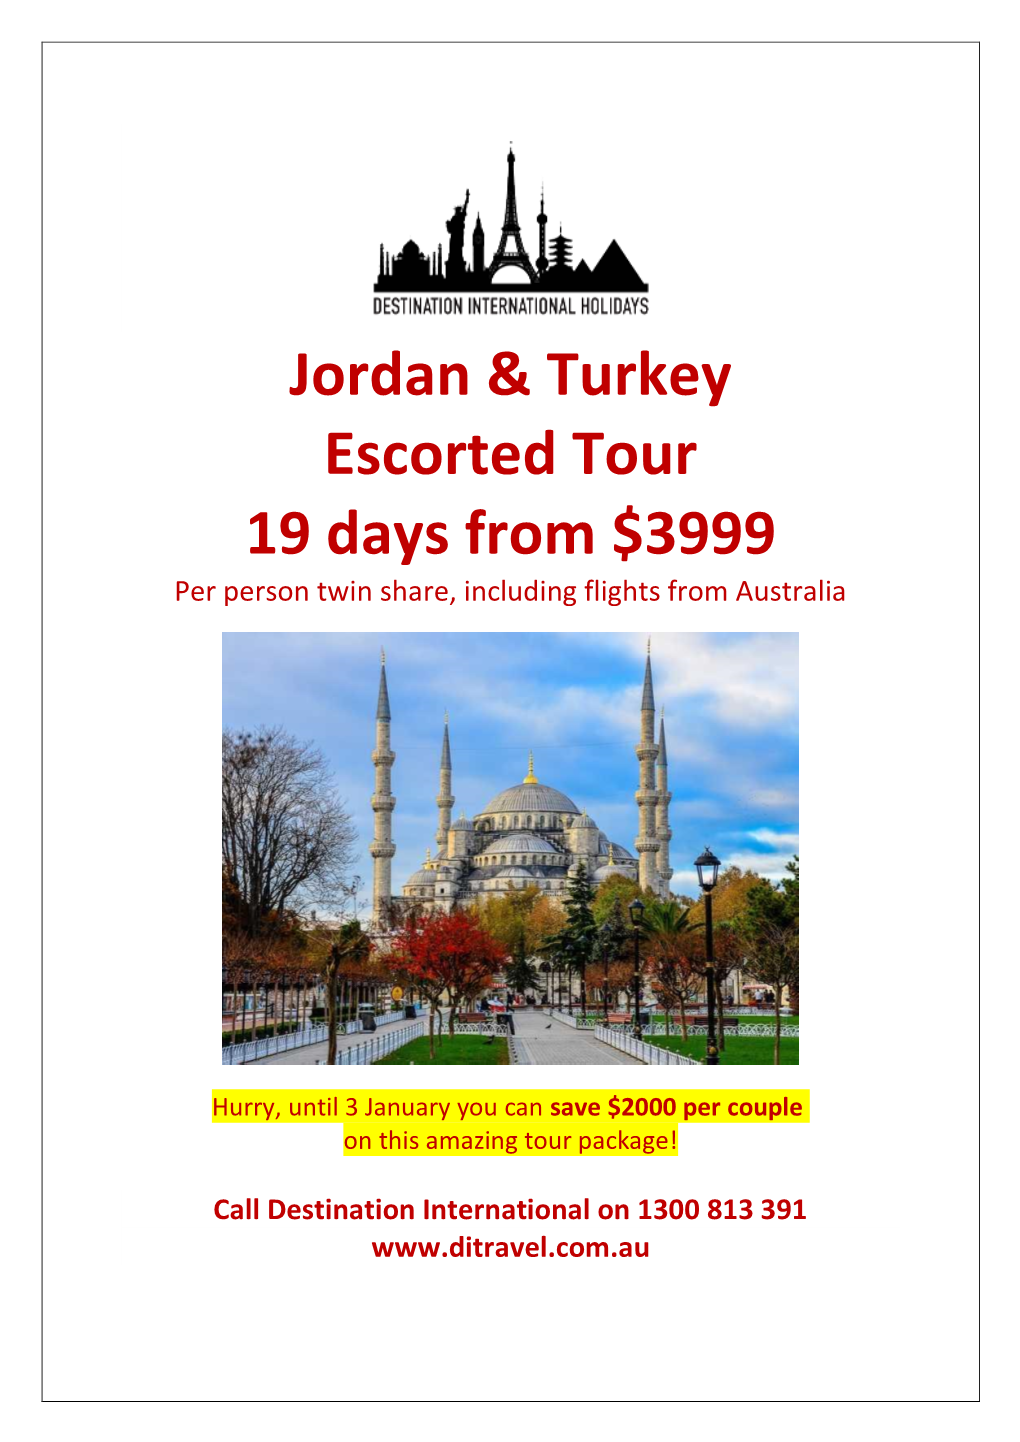 Jordan & Turkey Escorted Tour 19 Days from $3999